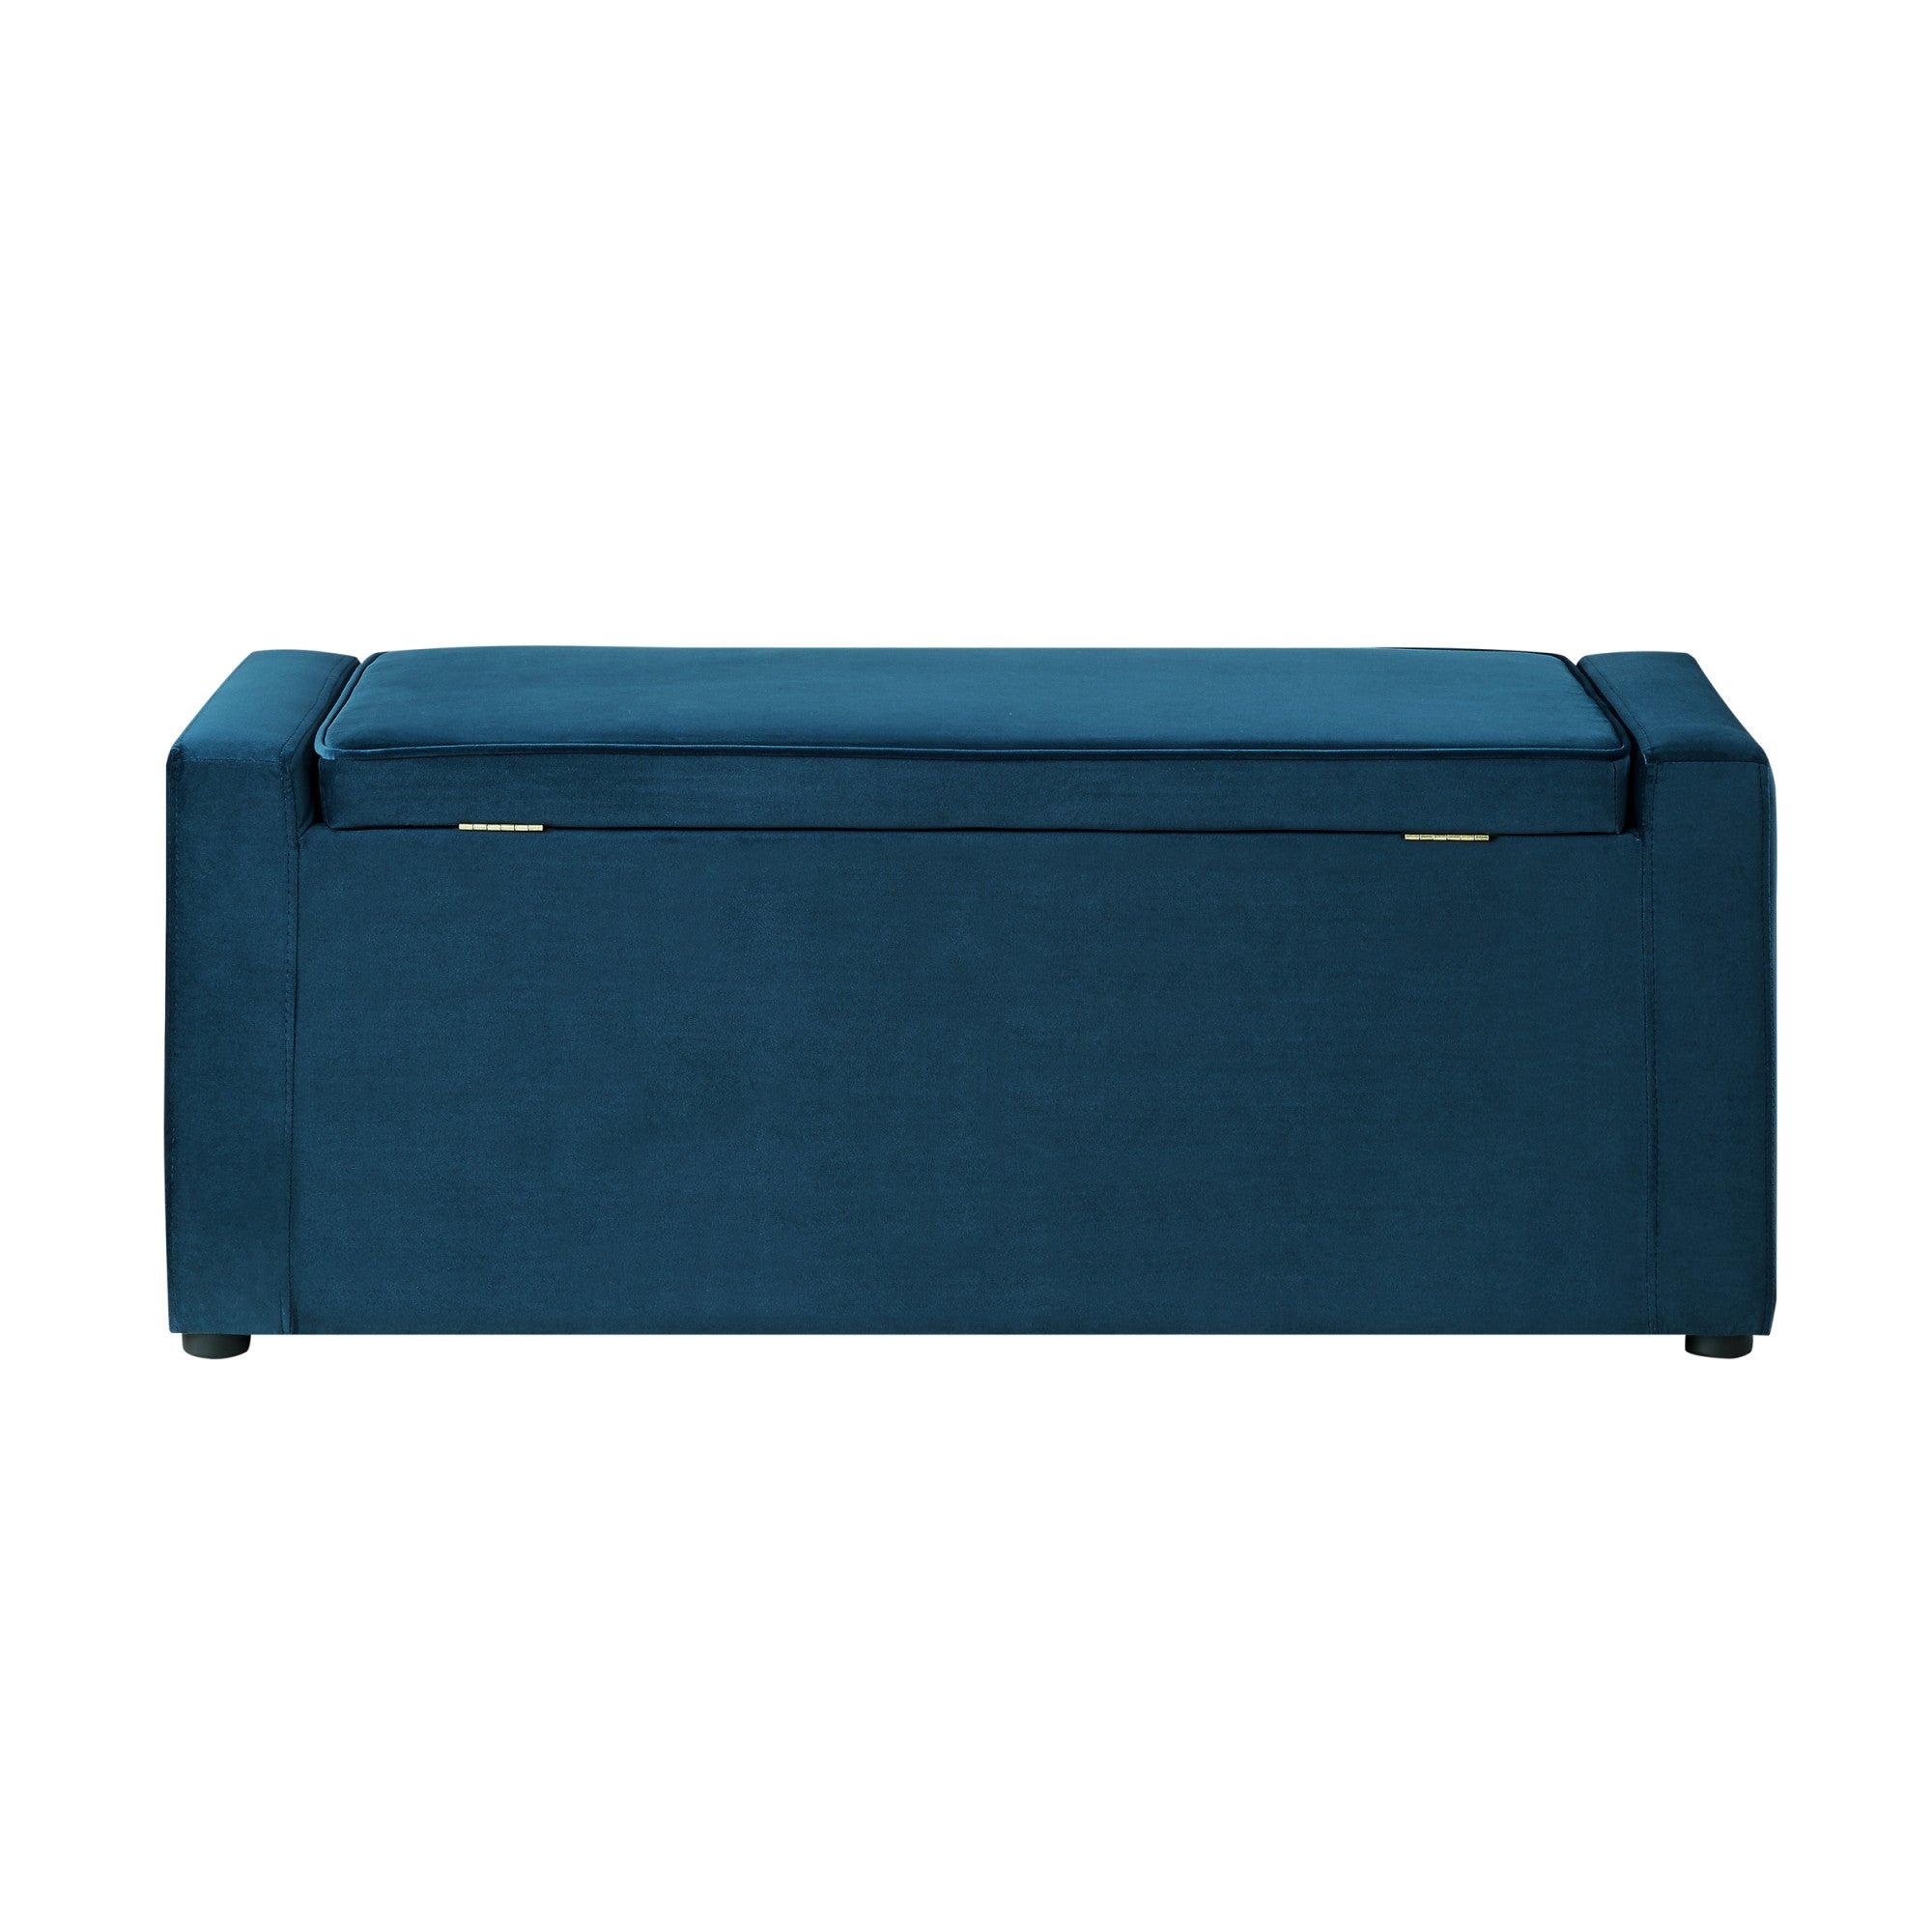 47" Navy Blue and Black Upholstered Velvet Bench with Flip top, Shoe Storage